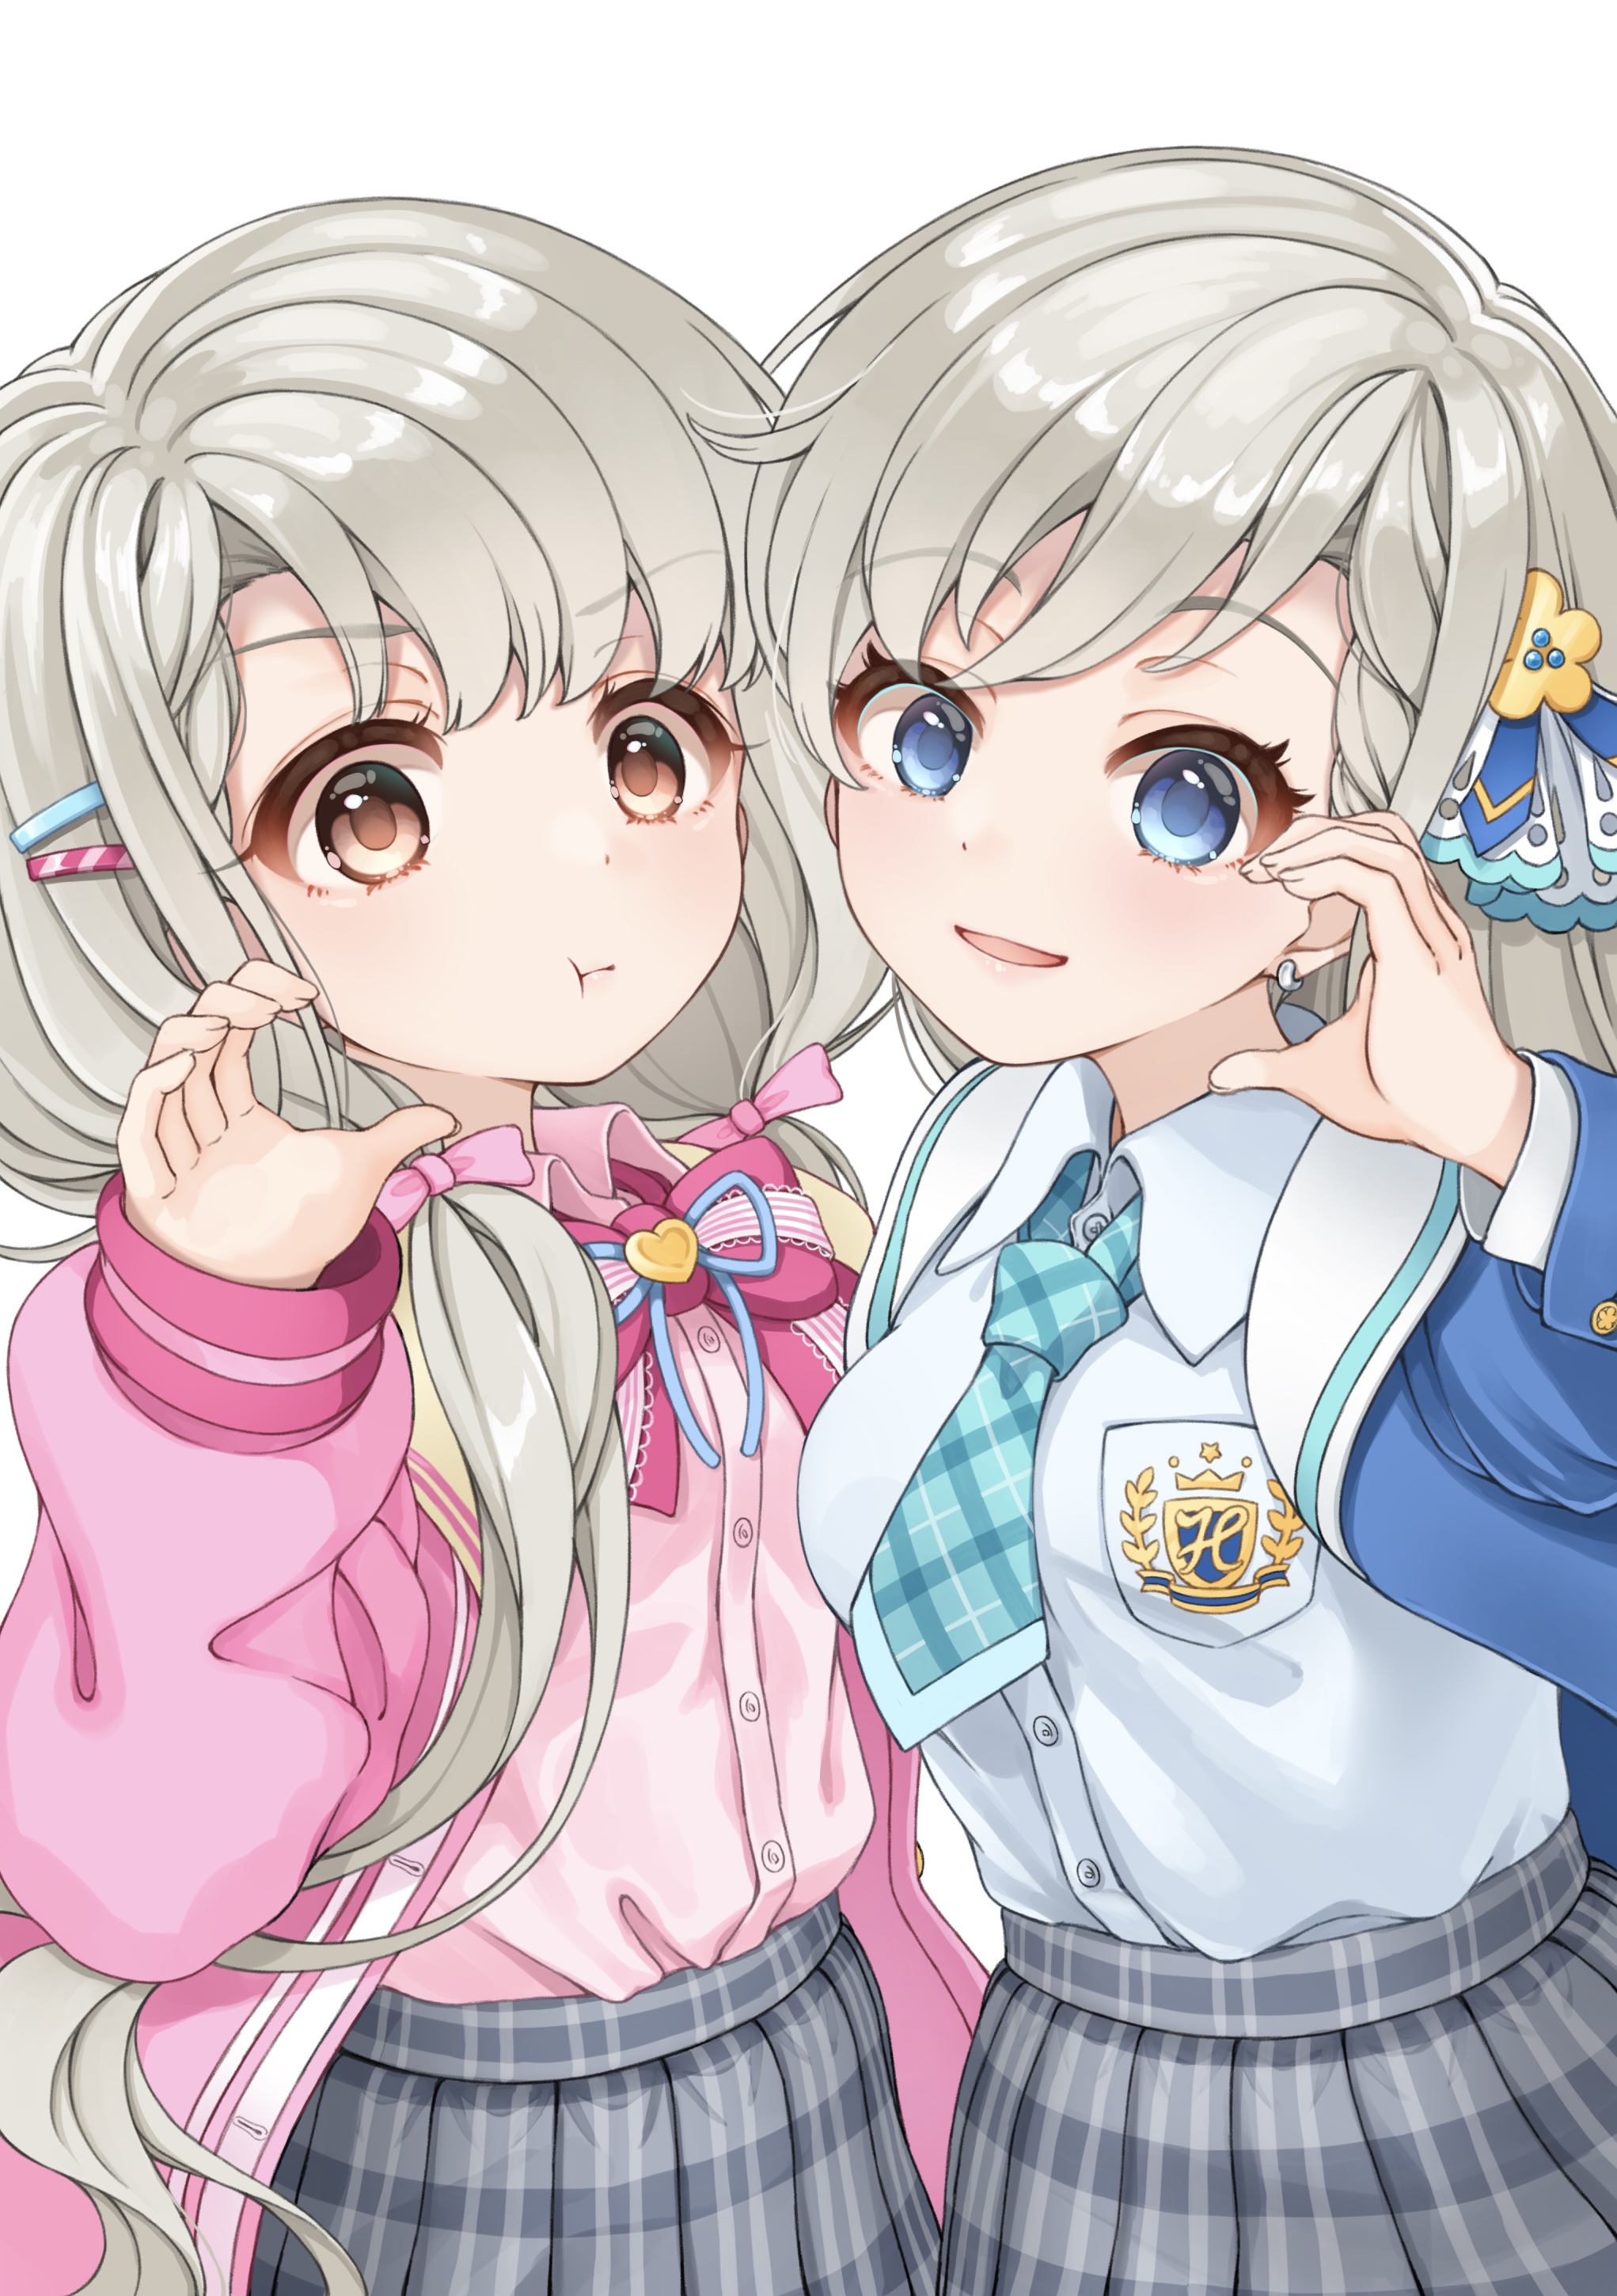 Anime 2043x2900 anime anime girls THE iDOLM@STER THE iDOLM@STER: Cinderella Girls Hisakawa Hayate Hisakawa Nagi long hair gray hair twins two women artwork digital art fan art